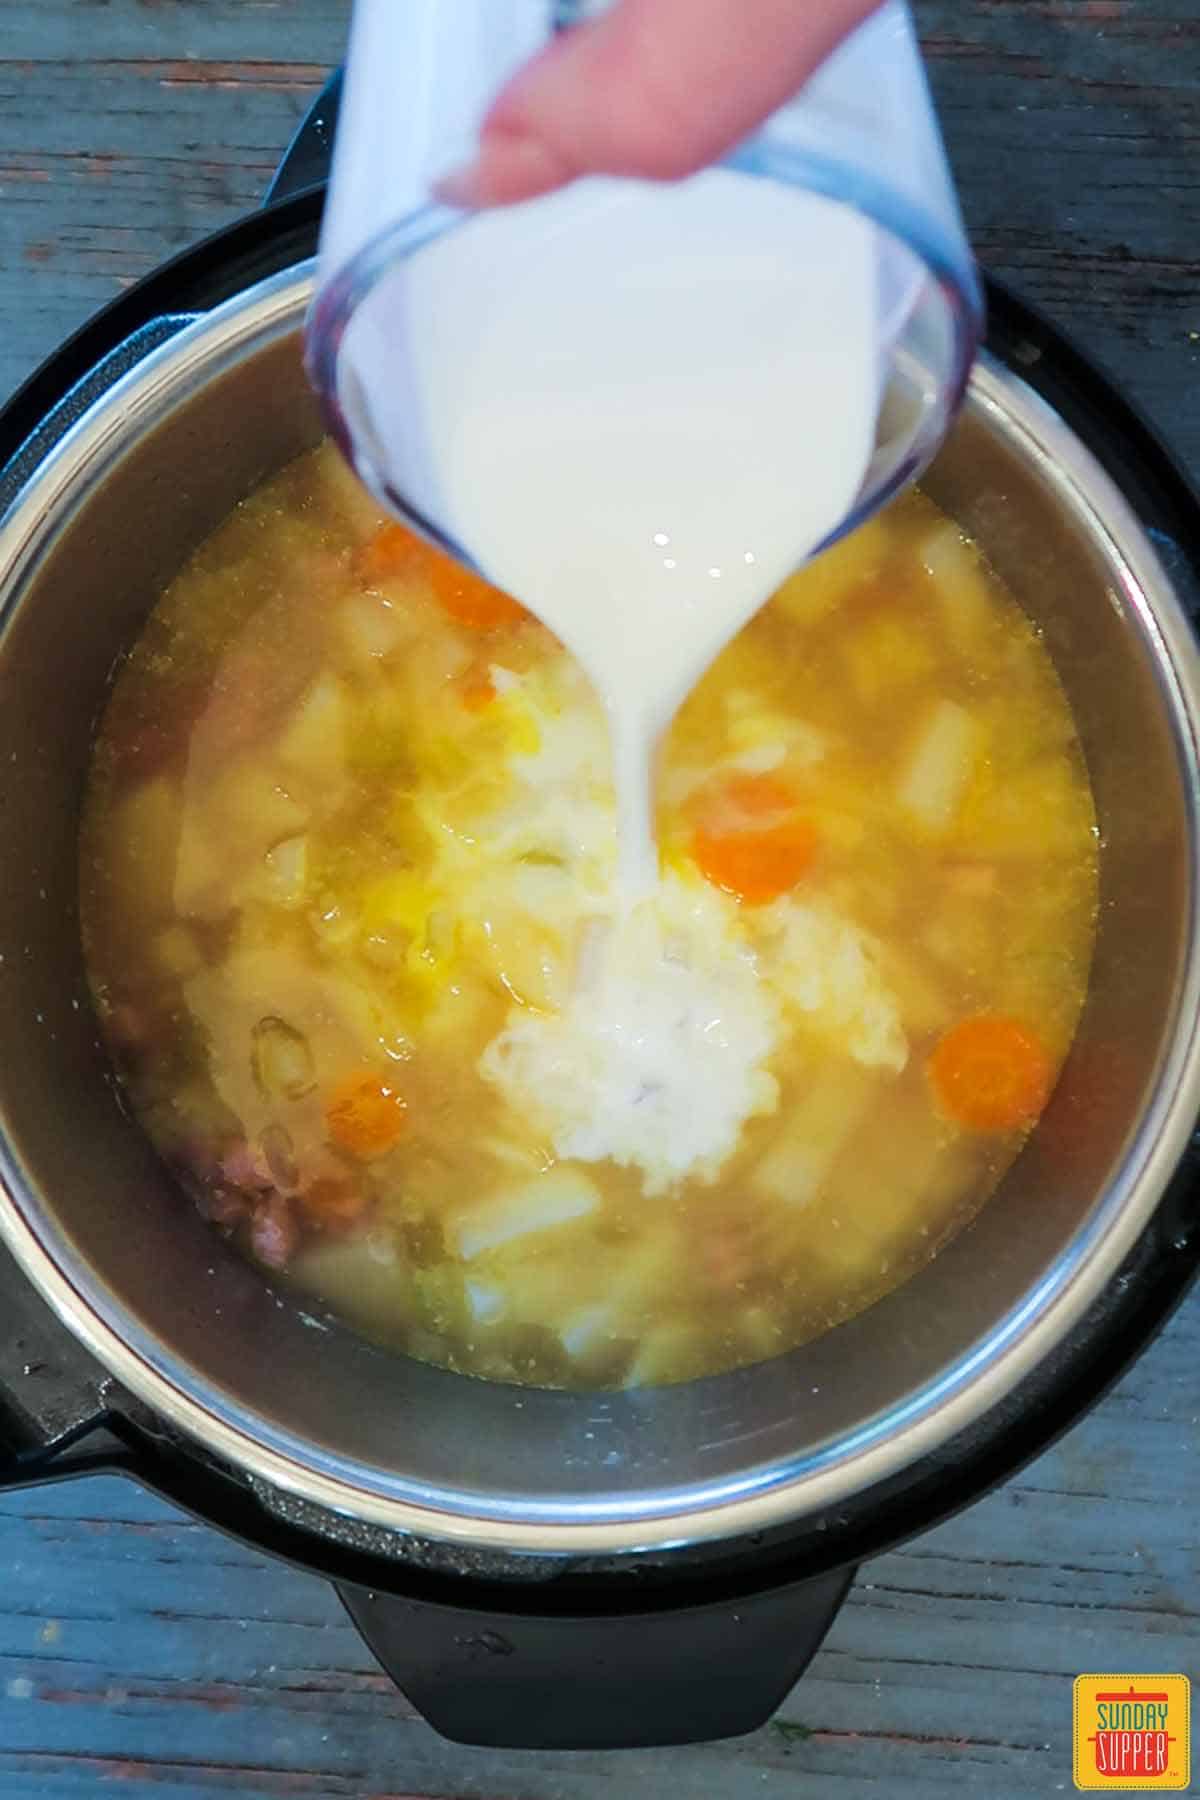 Pouring cream into the leftover ham soup